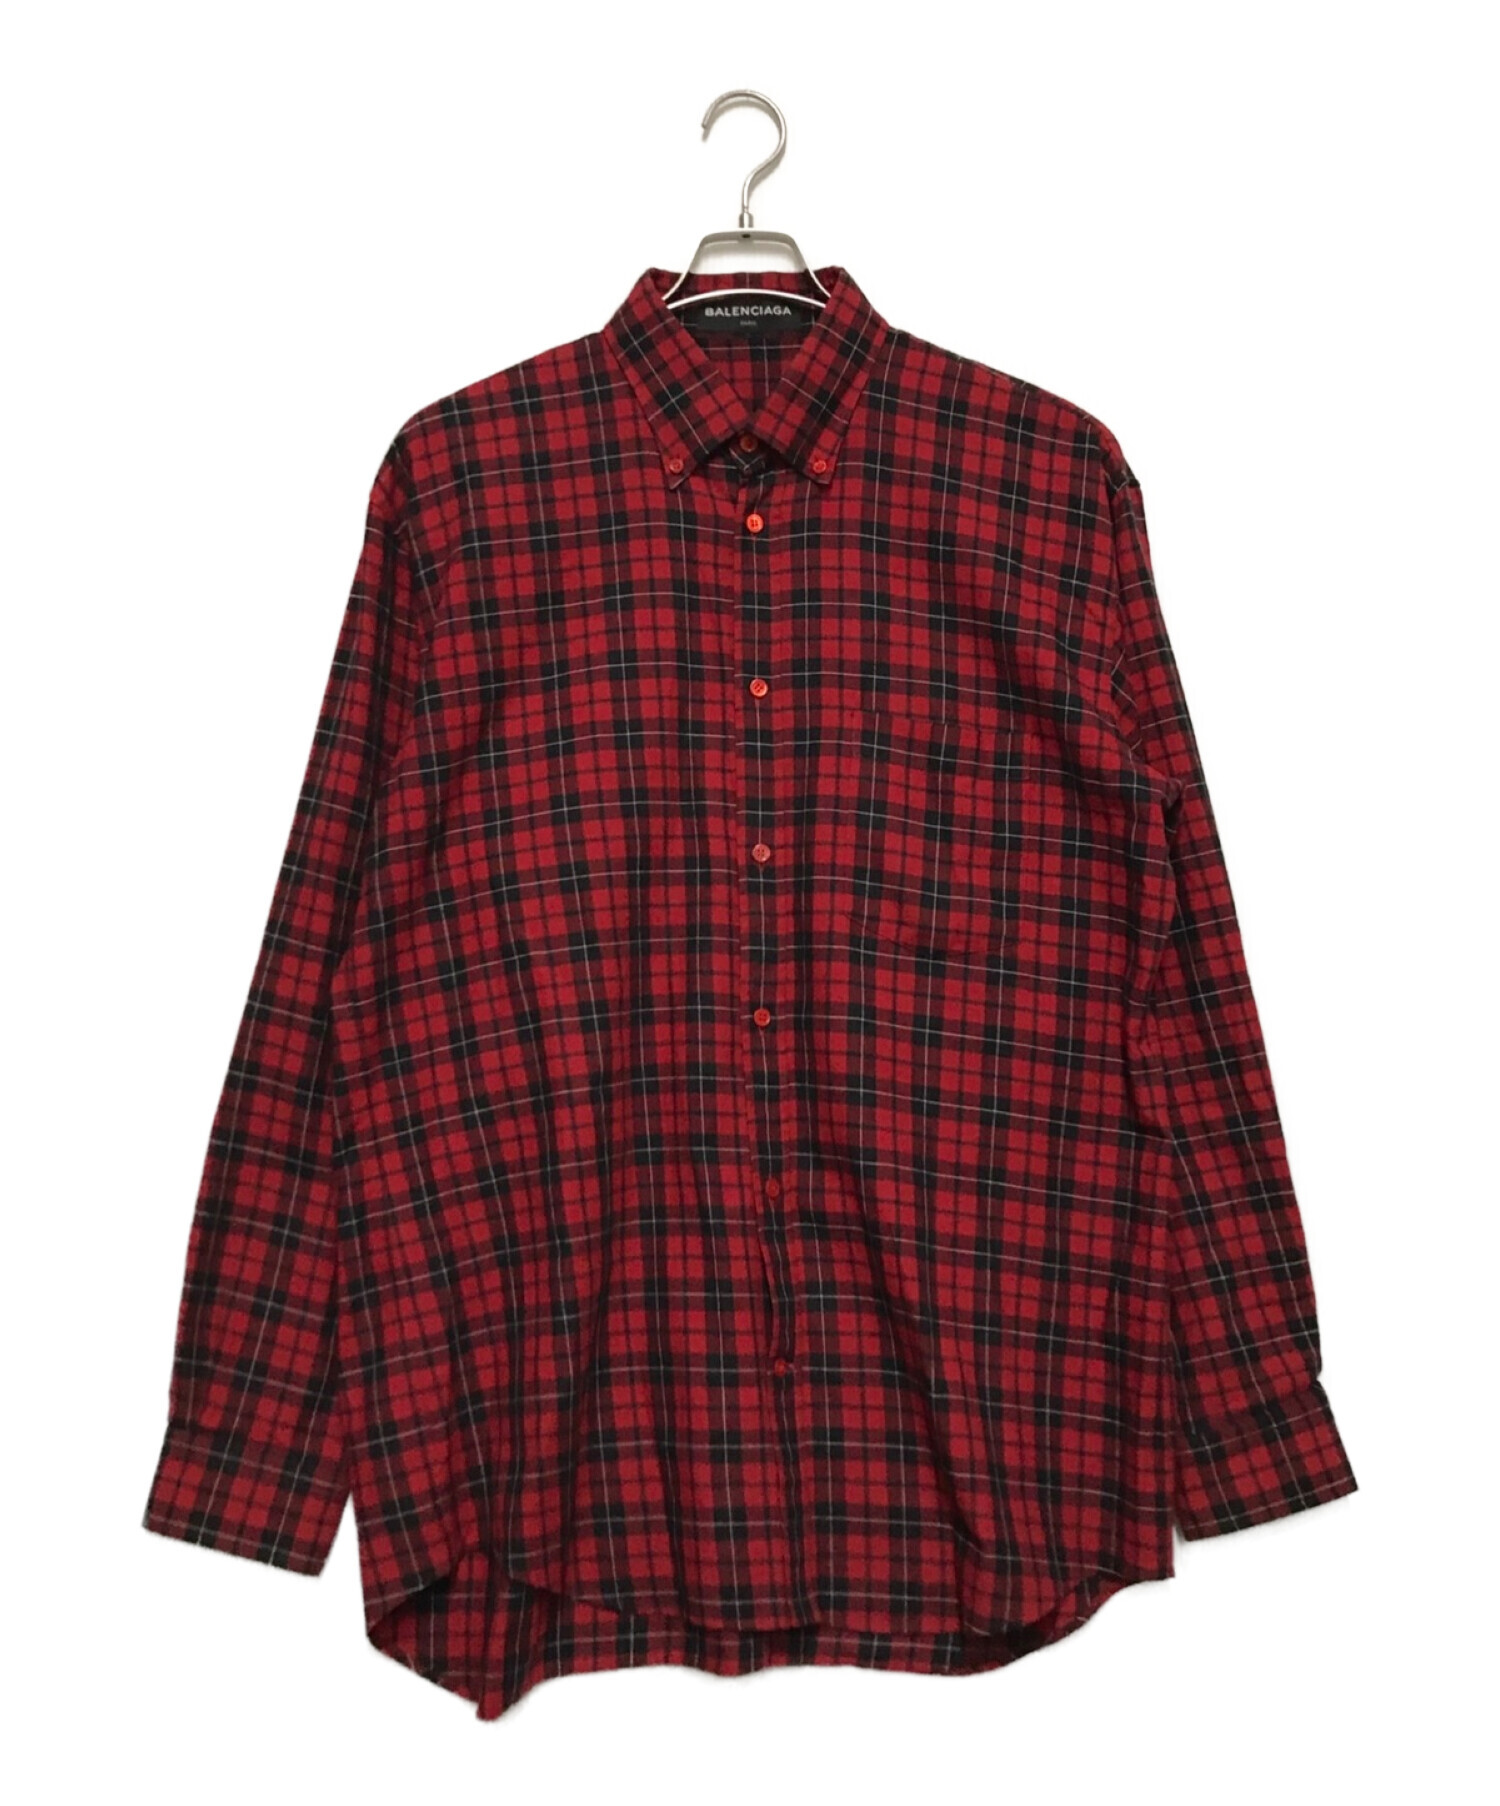 BALENCIAGA (バレンシアガ) バックプリントチェックシャツ レッド サイズ:39